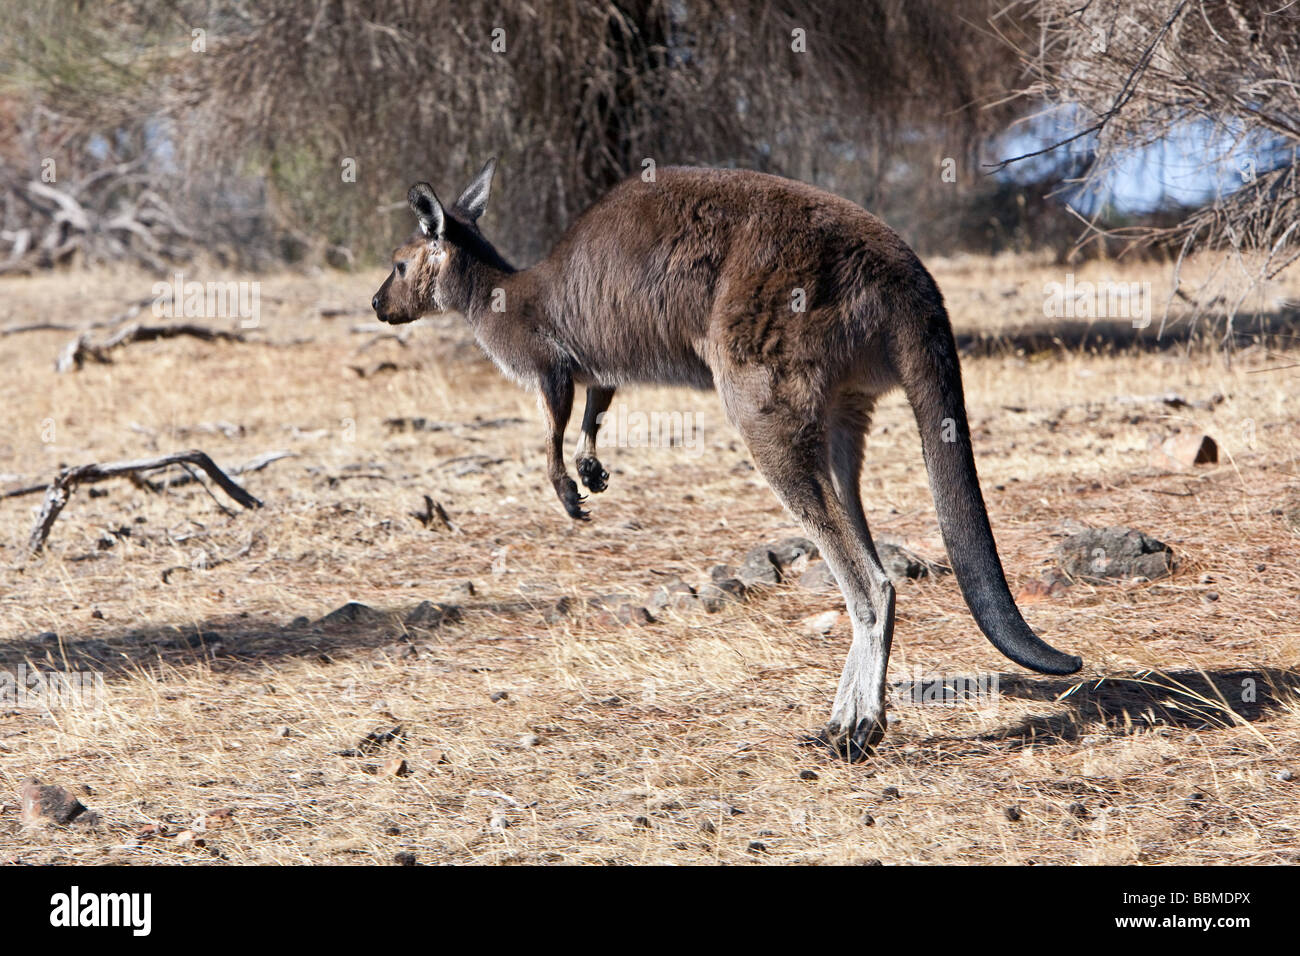 Australia, South Austrailia. A sub-species of Western Grey Kangaroo known as the Kangaroo Island Kangaroo. Stock Photo